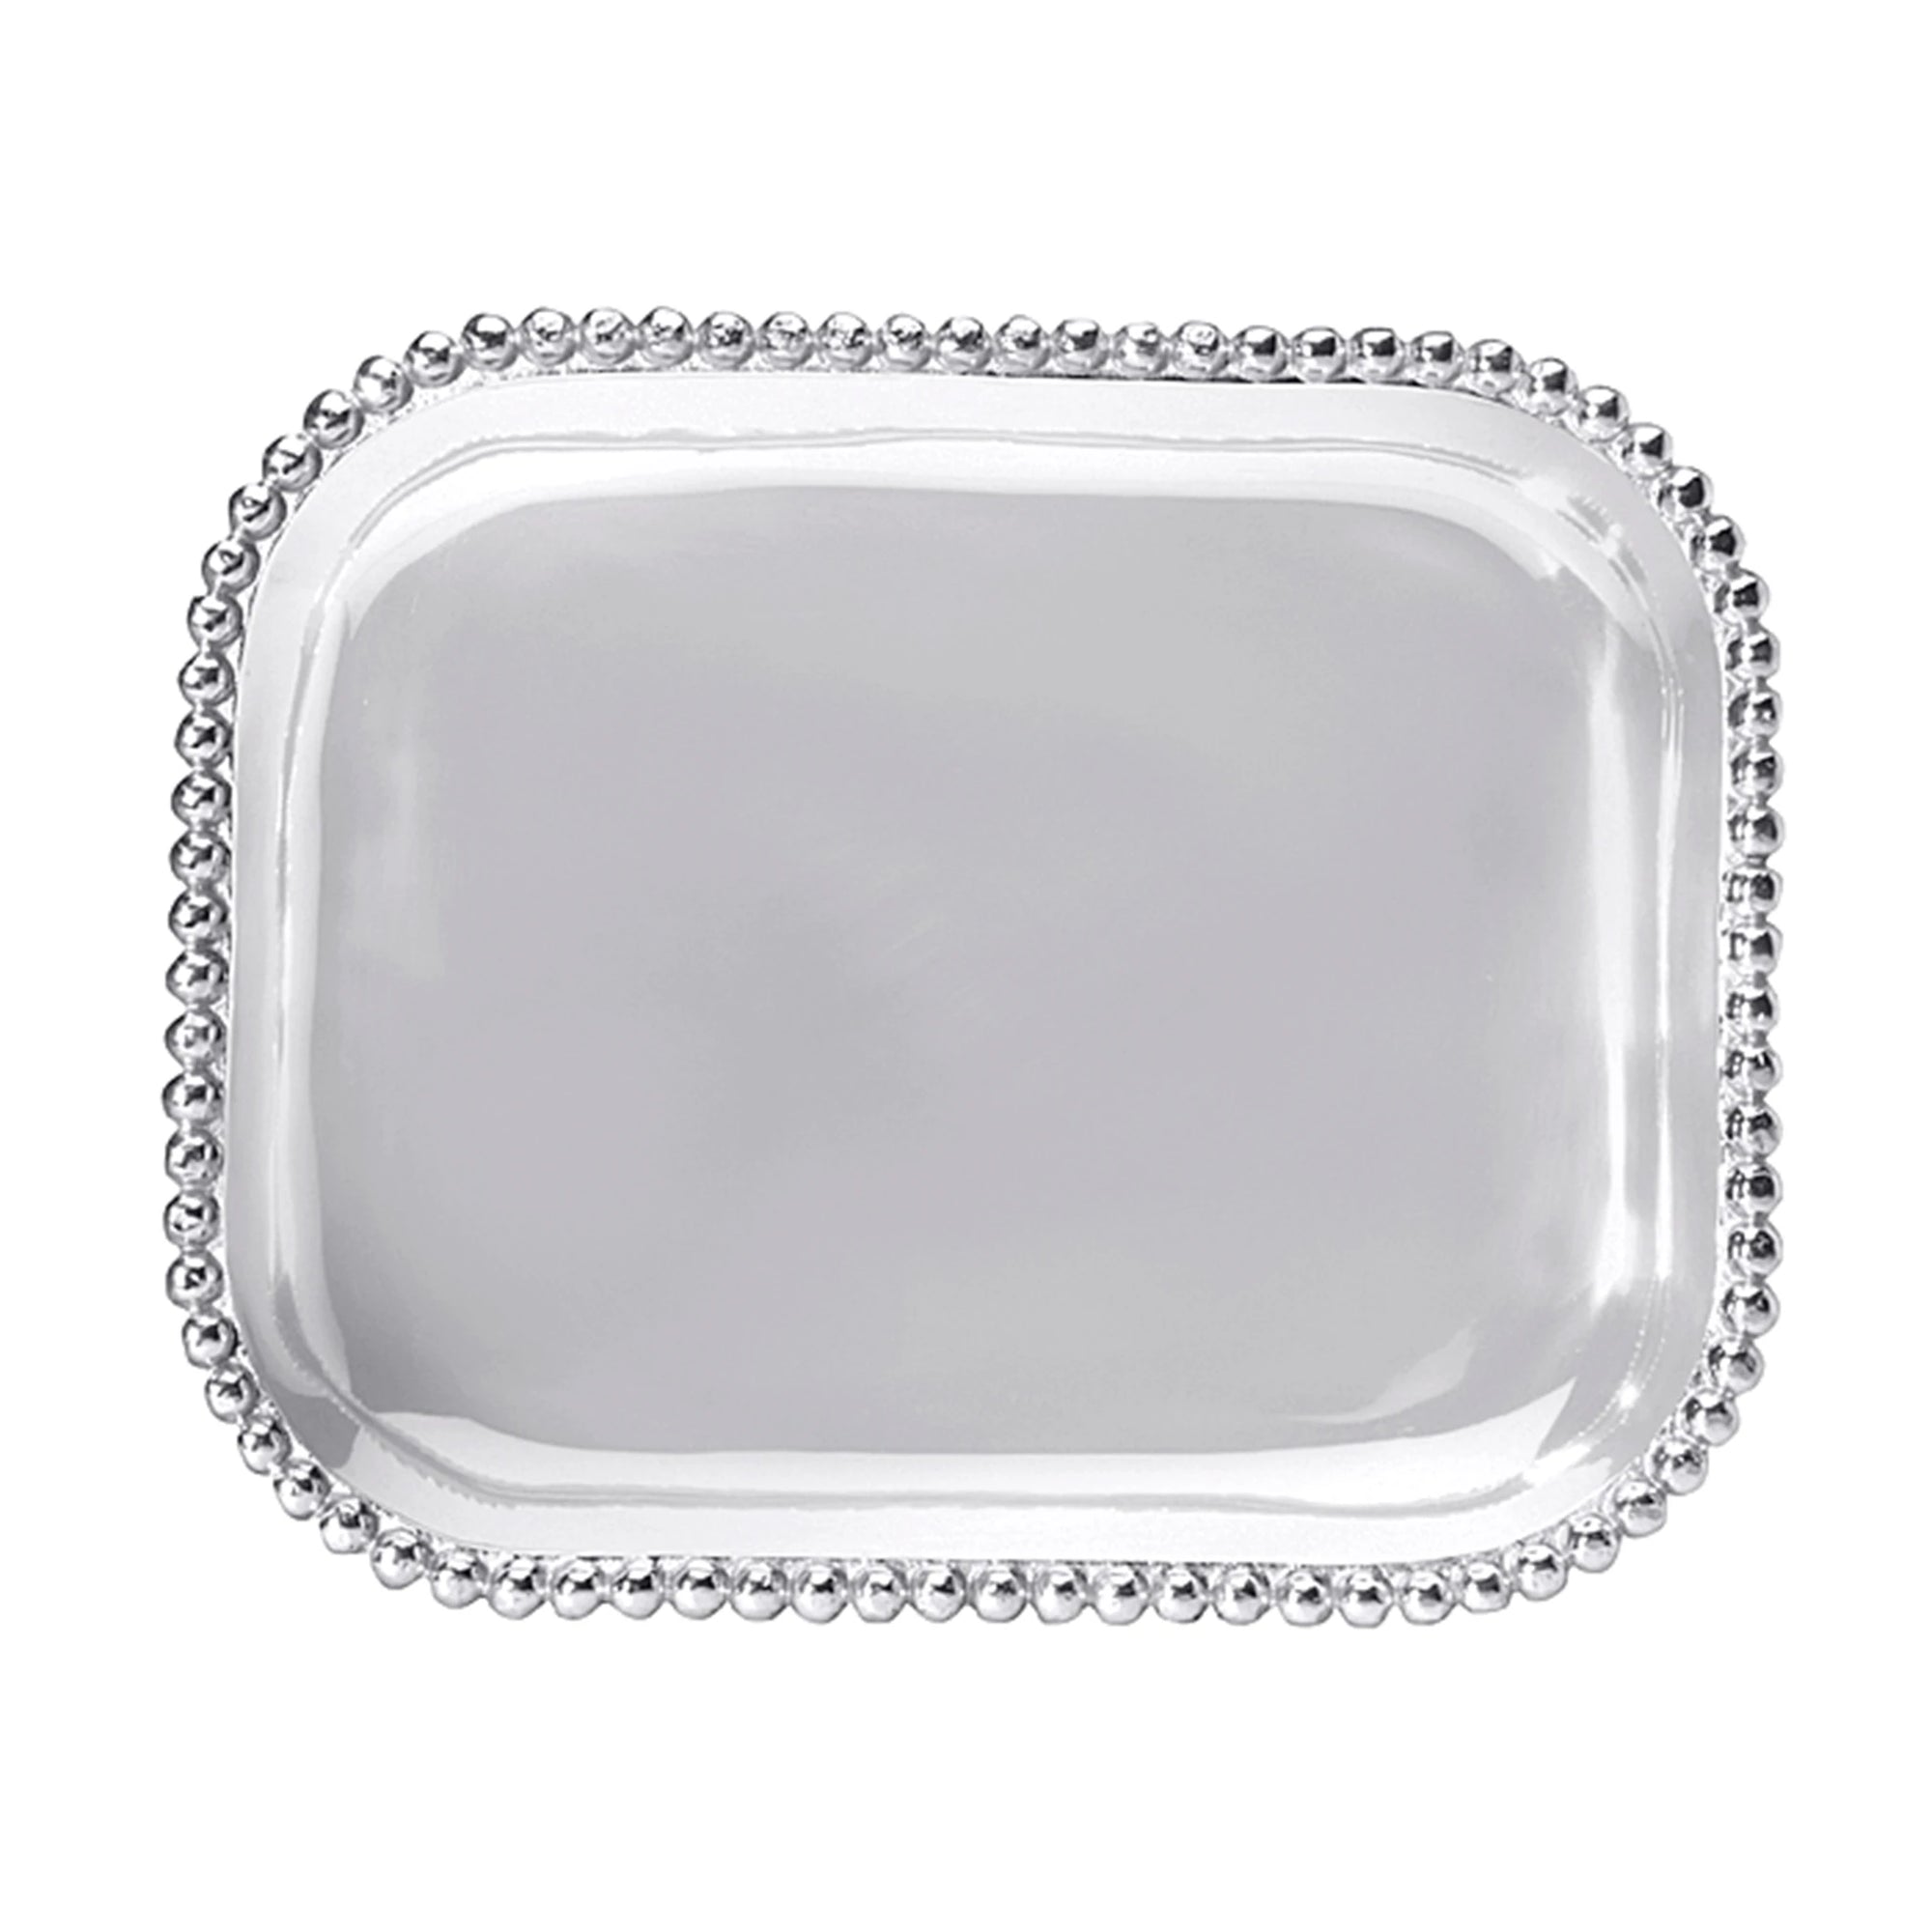 Pearled Rectangular Platter